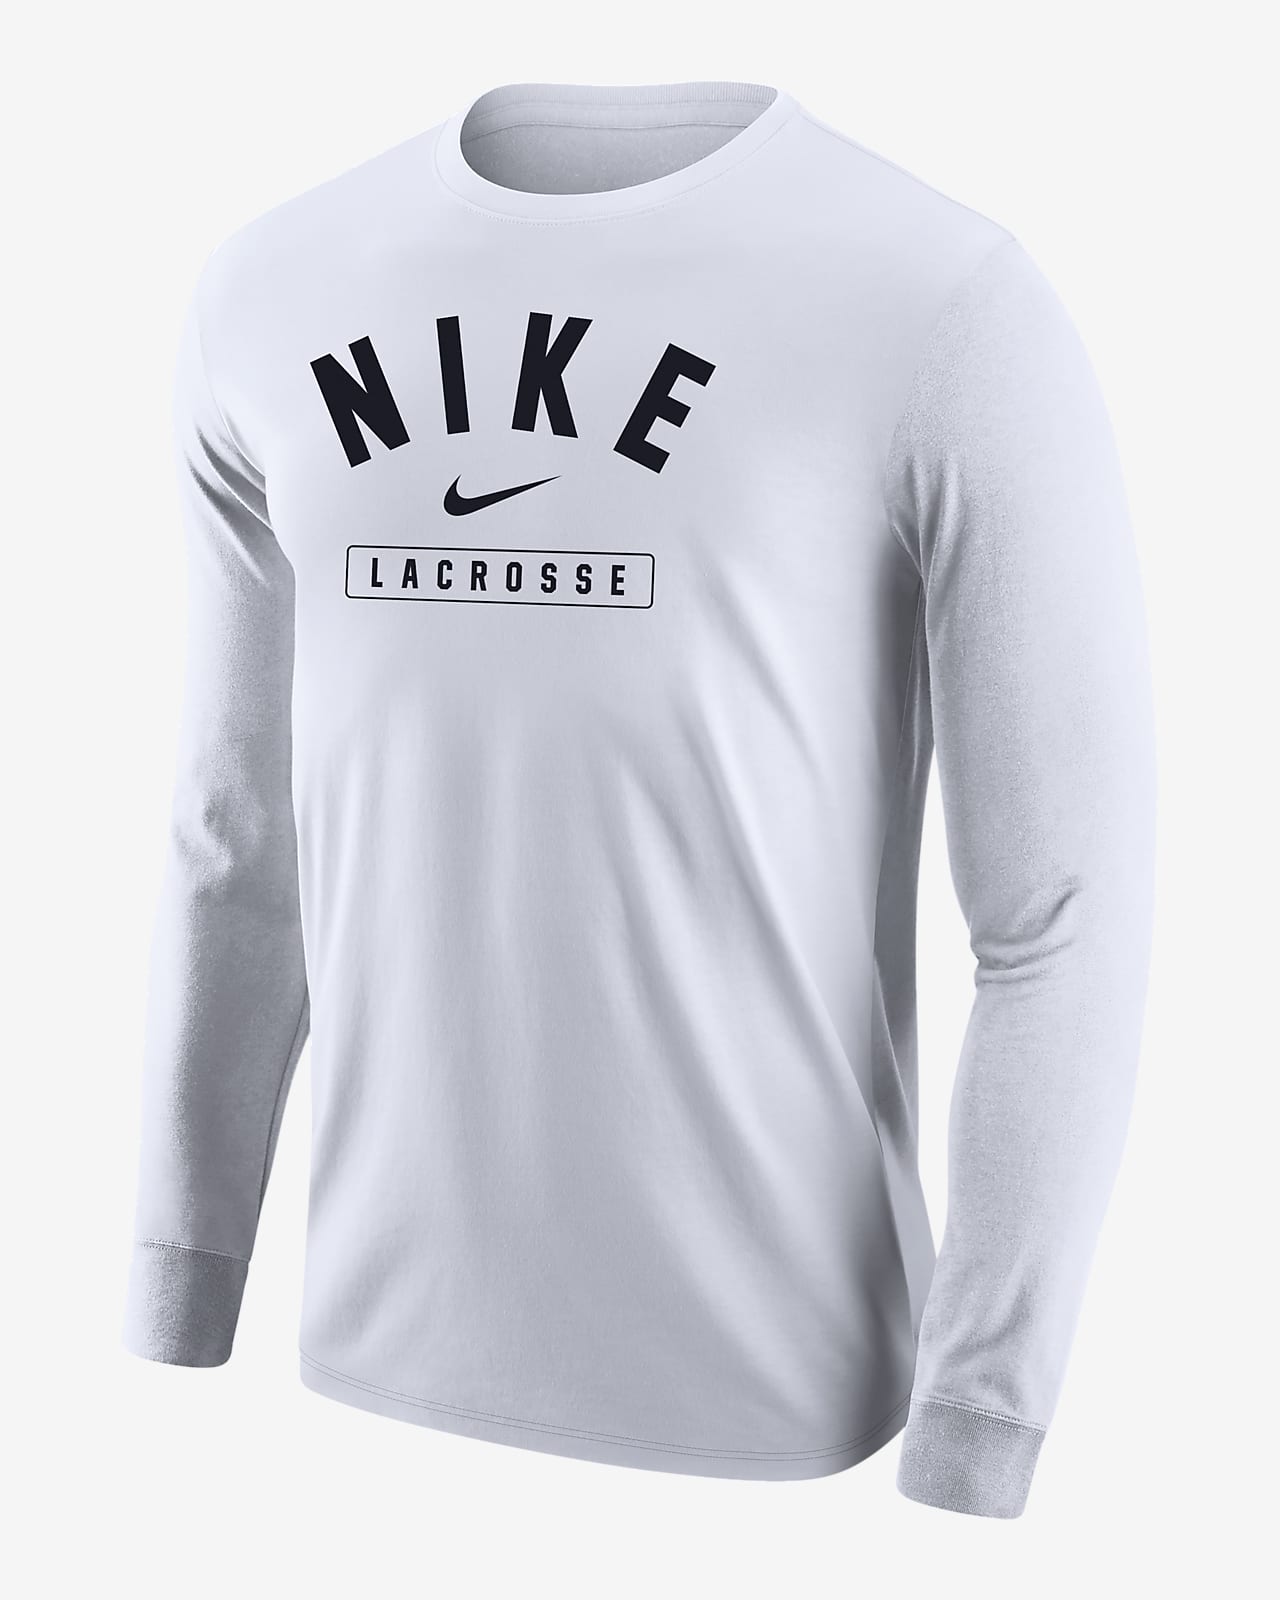 Nike Lacrosse Men's Long-Sleeve T-Shirt